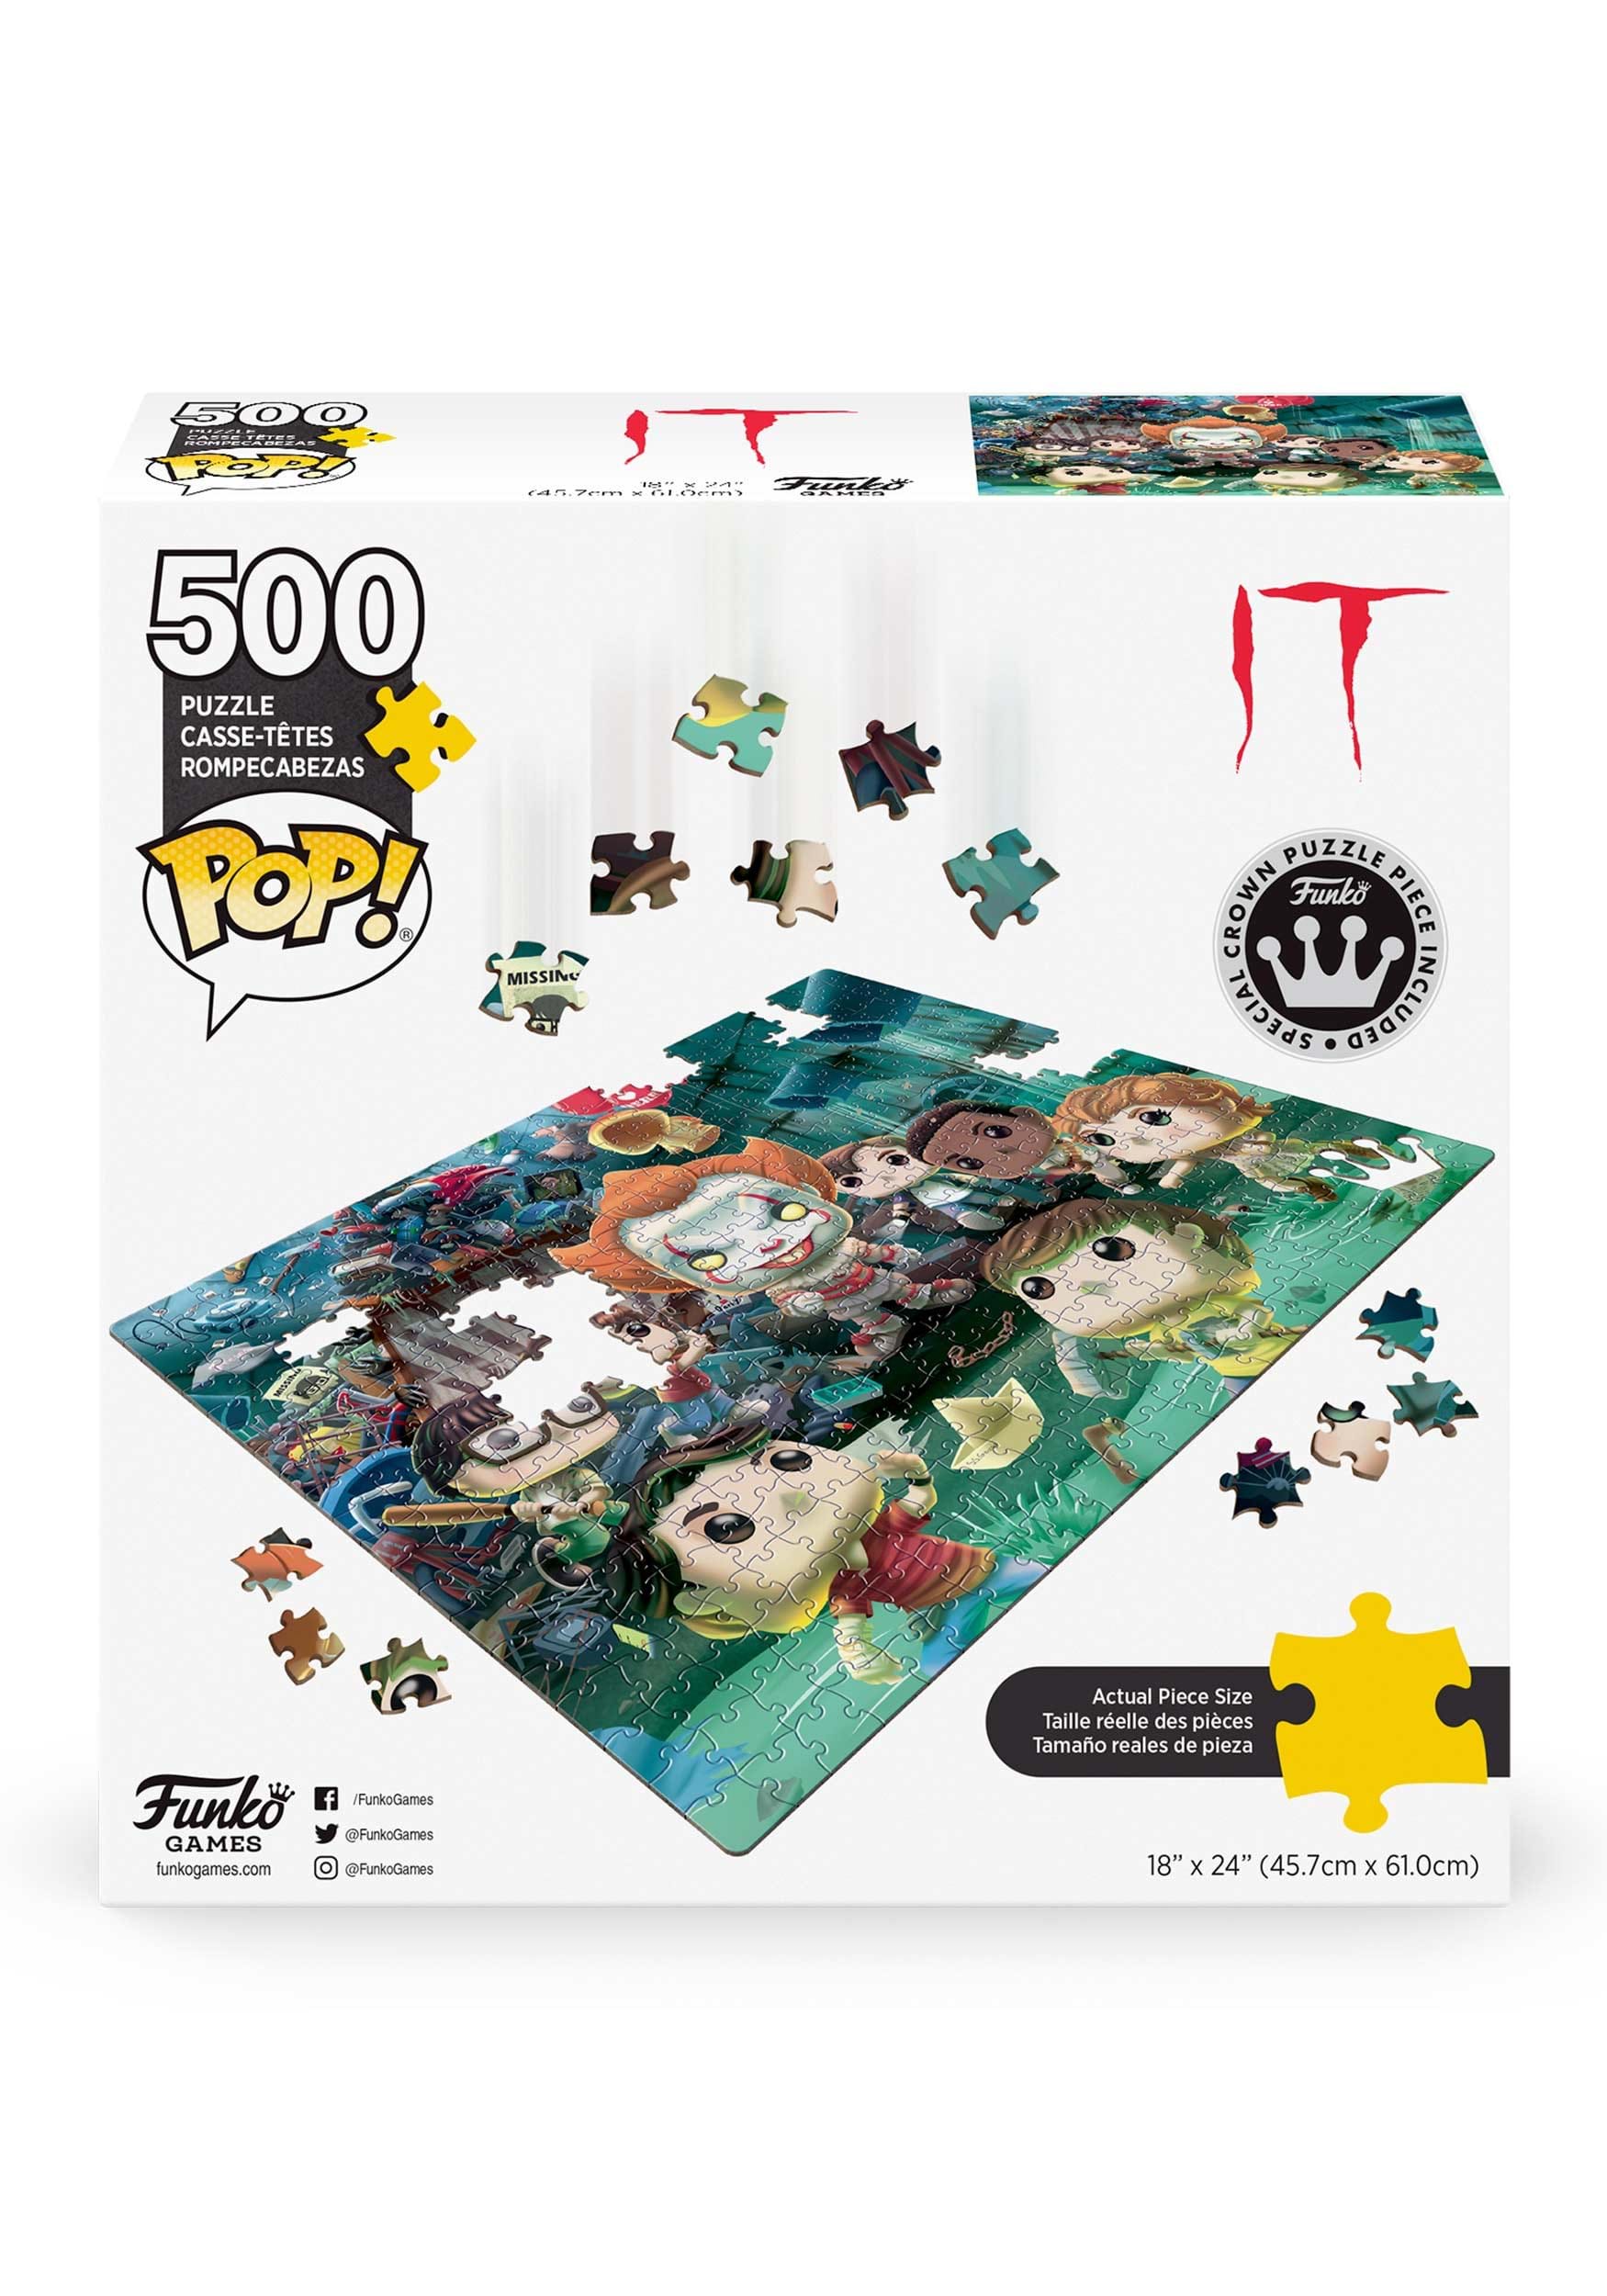 The Nightmare Before Christmas Blacklight 500-Piece Funko Pop! Puzzle